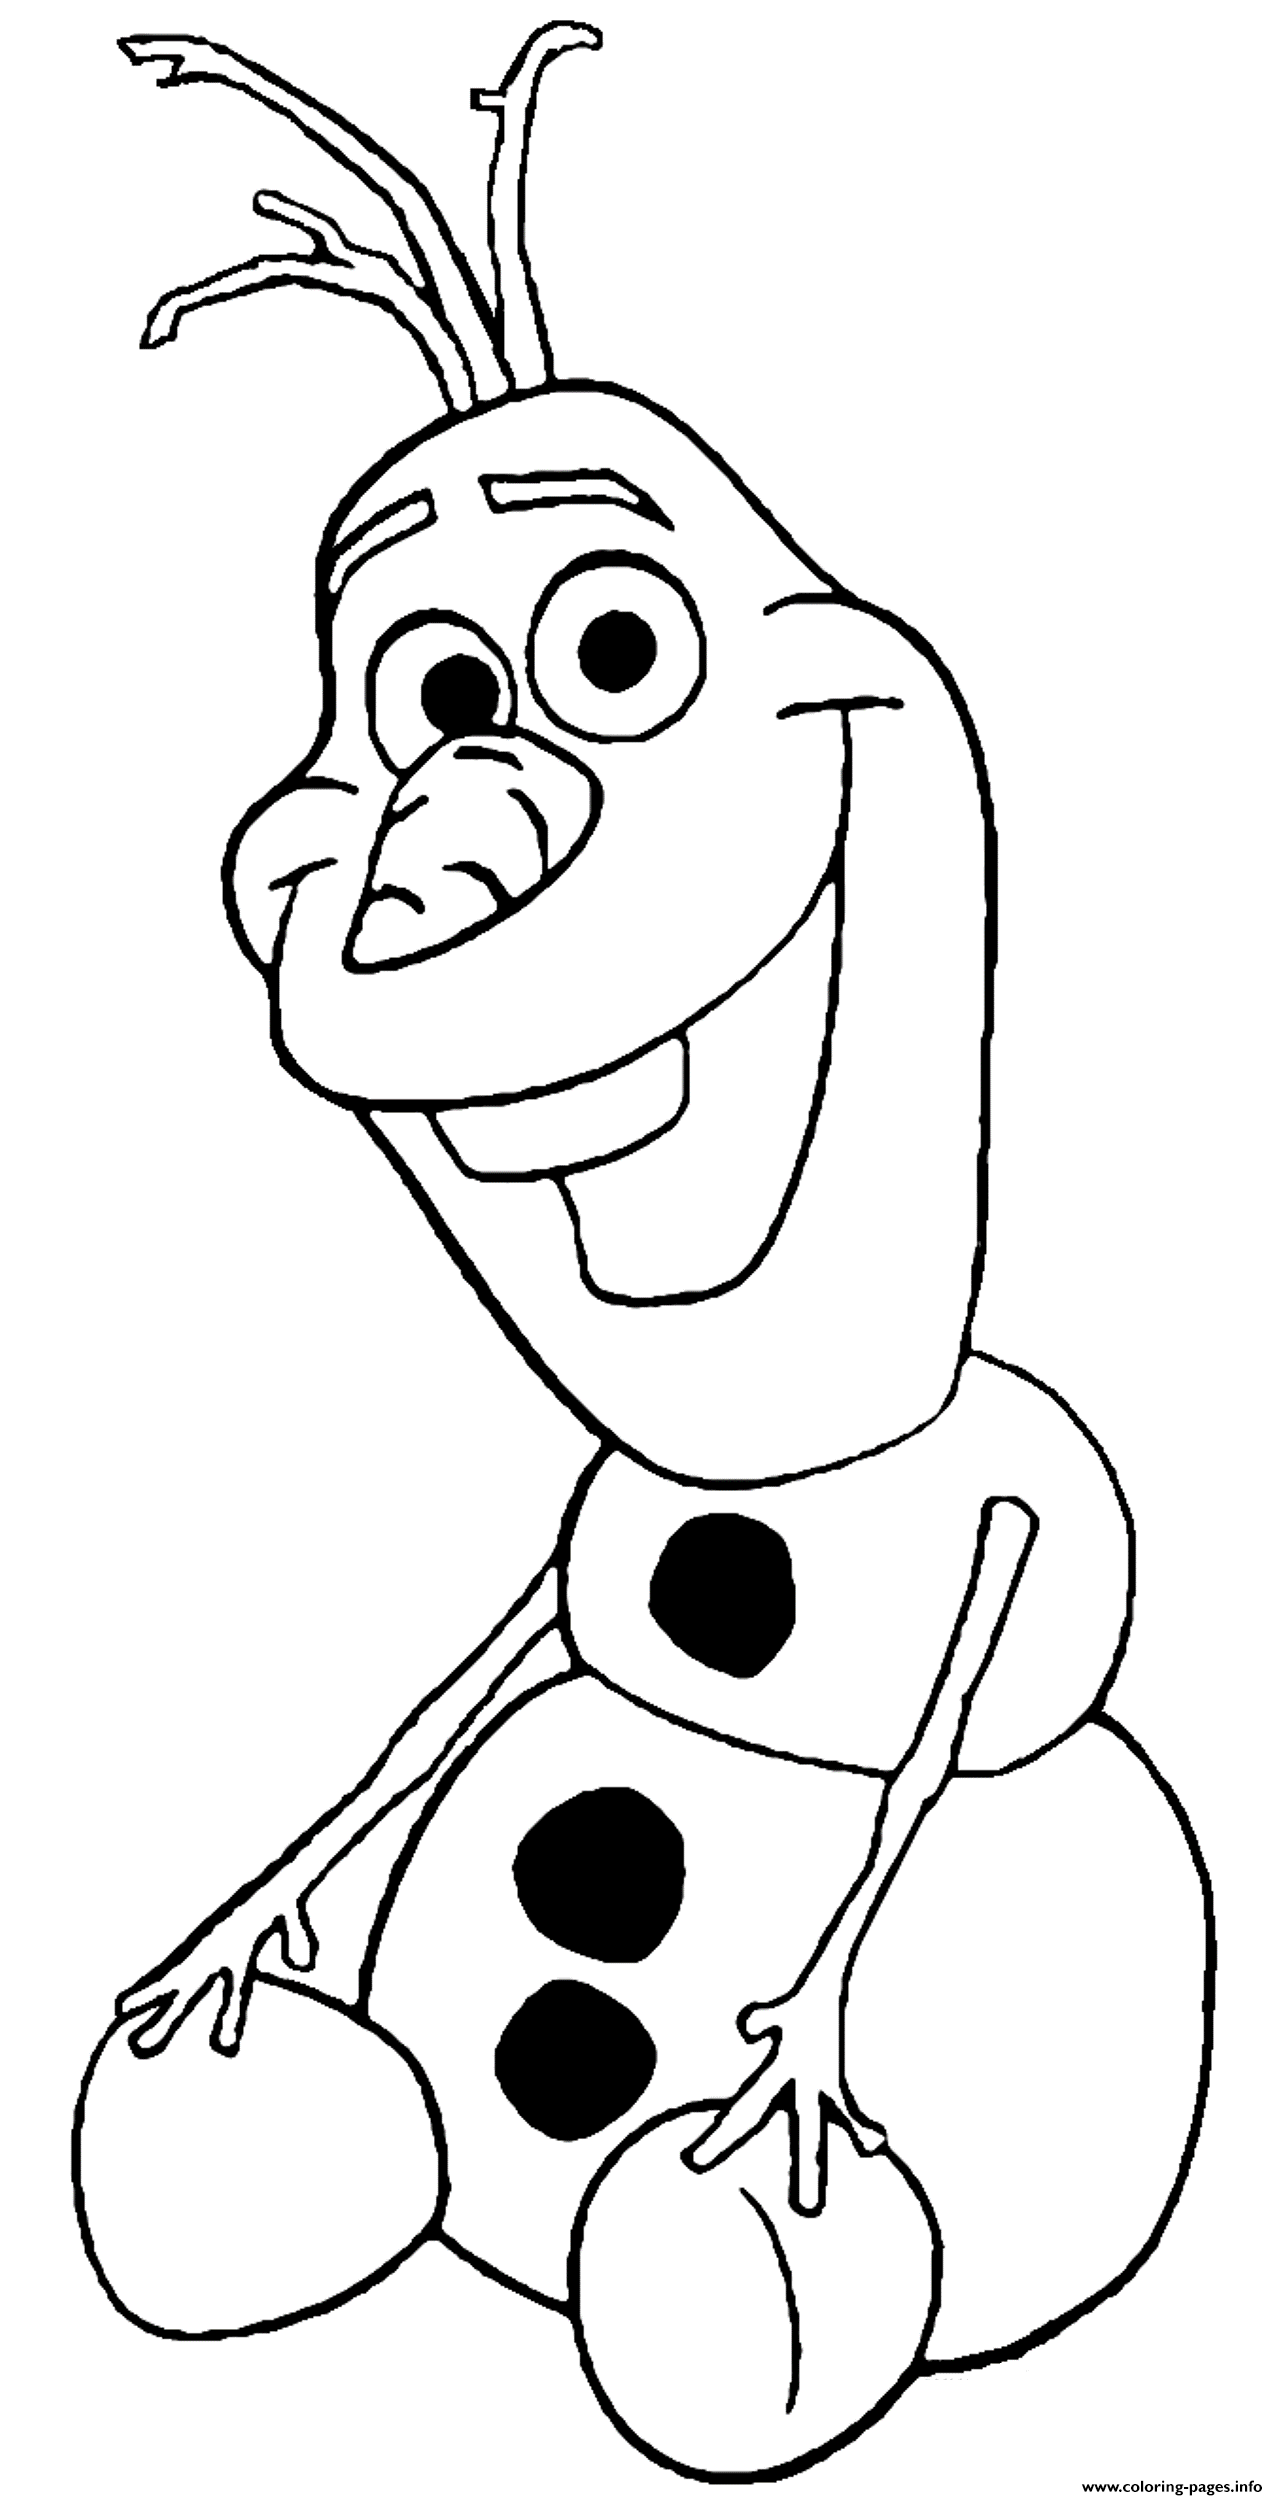 Olaf Friendliest Snowman In Arendelle coloring